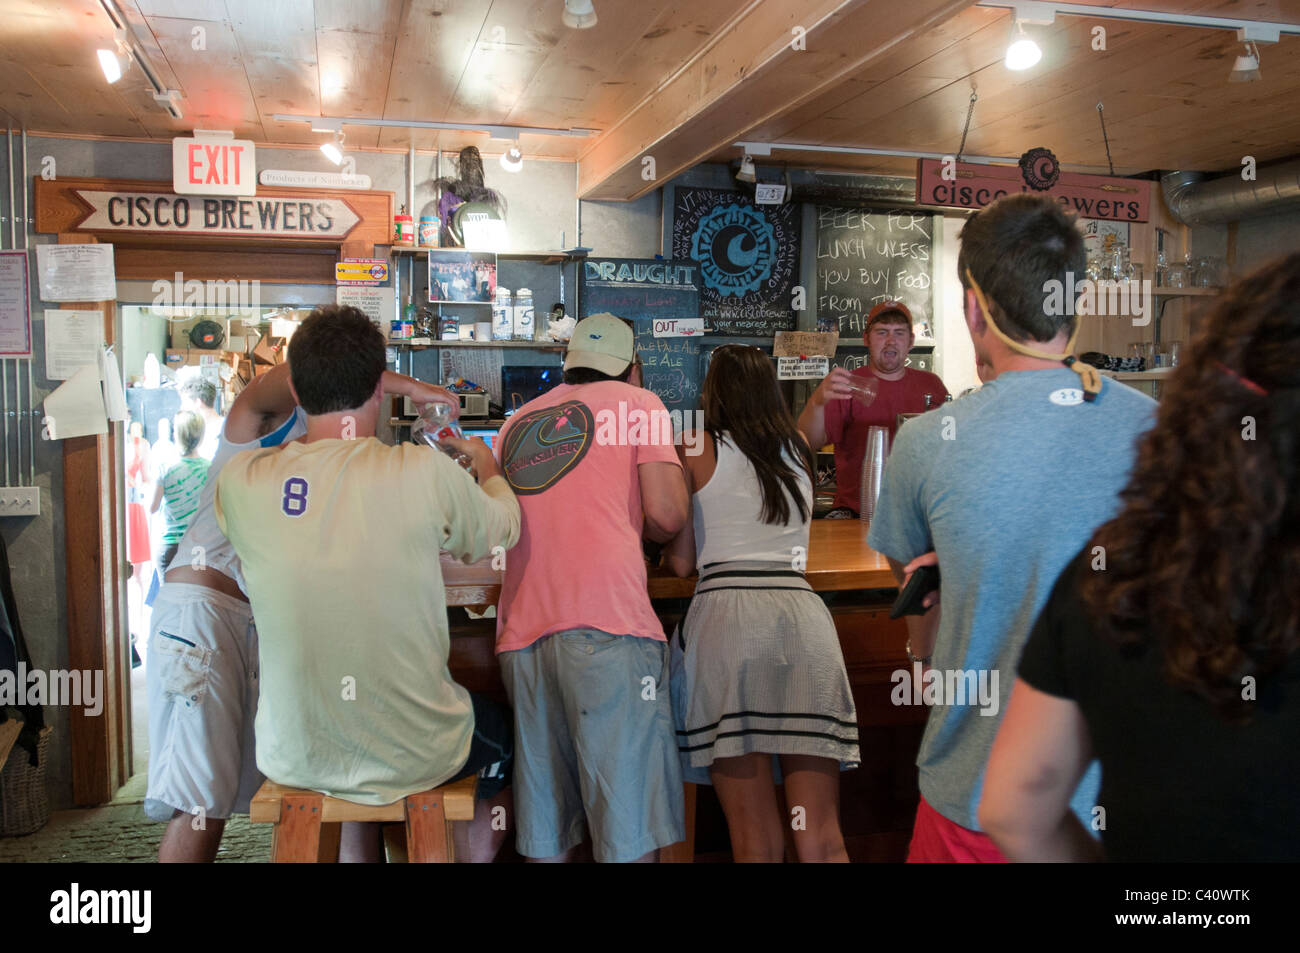 Patroni lineup al bar per un drink presso Cisco Brewers Nantucket Island. Foto Stock